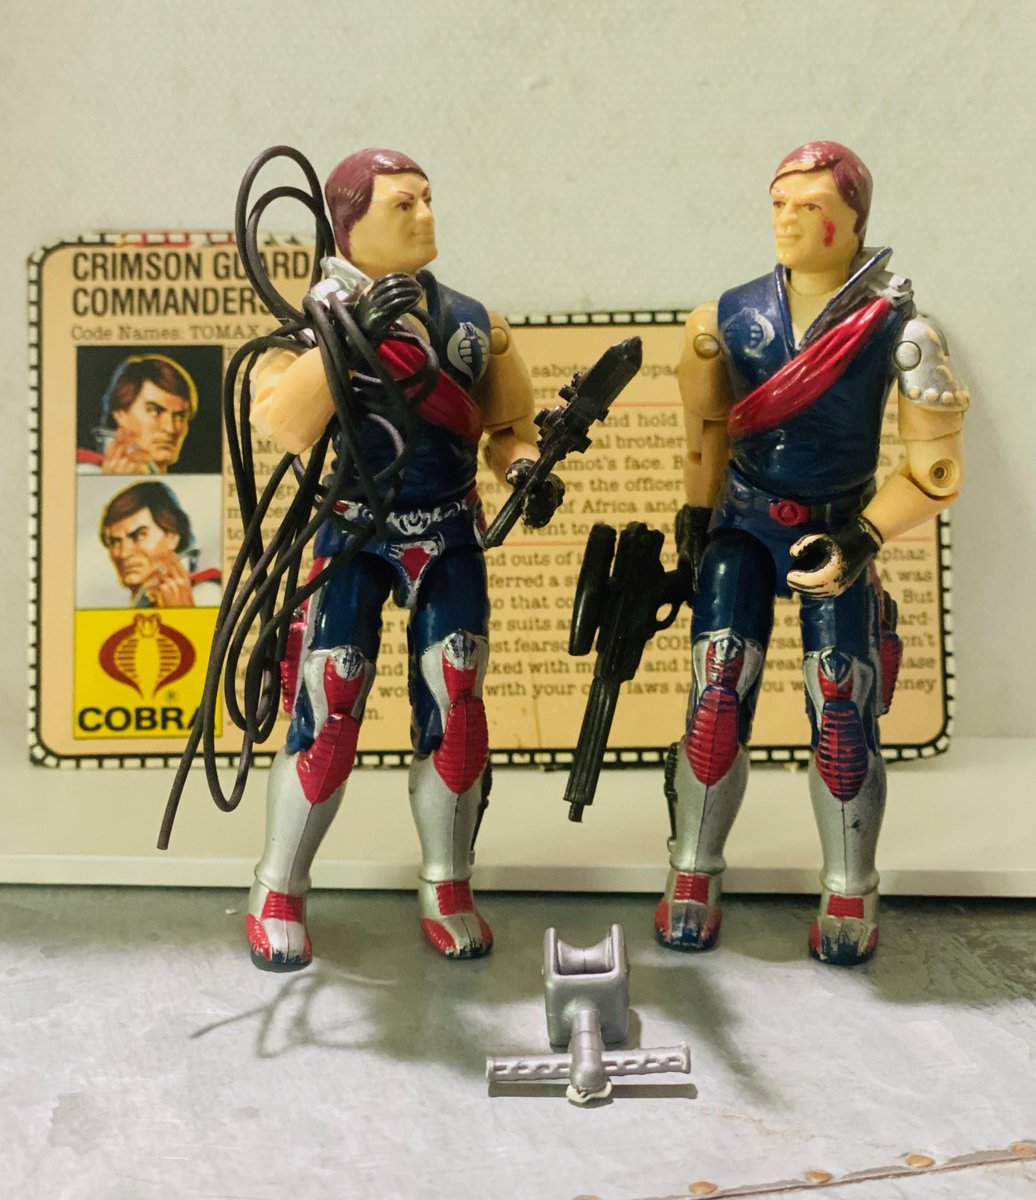 1985 Tomax & Xamot Crimson Guard Commanders file card now in the collection. 

#YoJoe #GIJoe #GIJoeNation #ToyCollector #GIJoePhotography #Nostalgia #ARAH #Cobra #GIJoeFigures #ActionFigure #80sToys #Collectibles #ToyPhotography #VintageToys